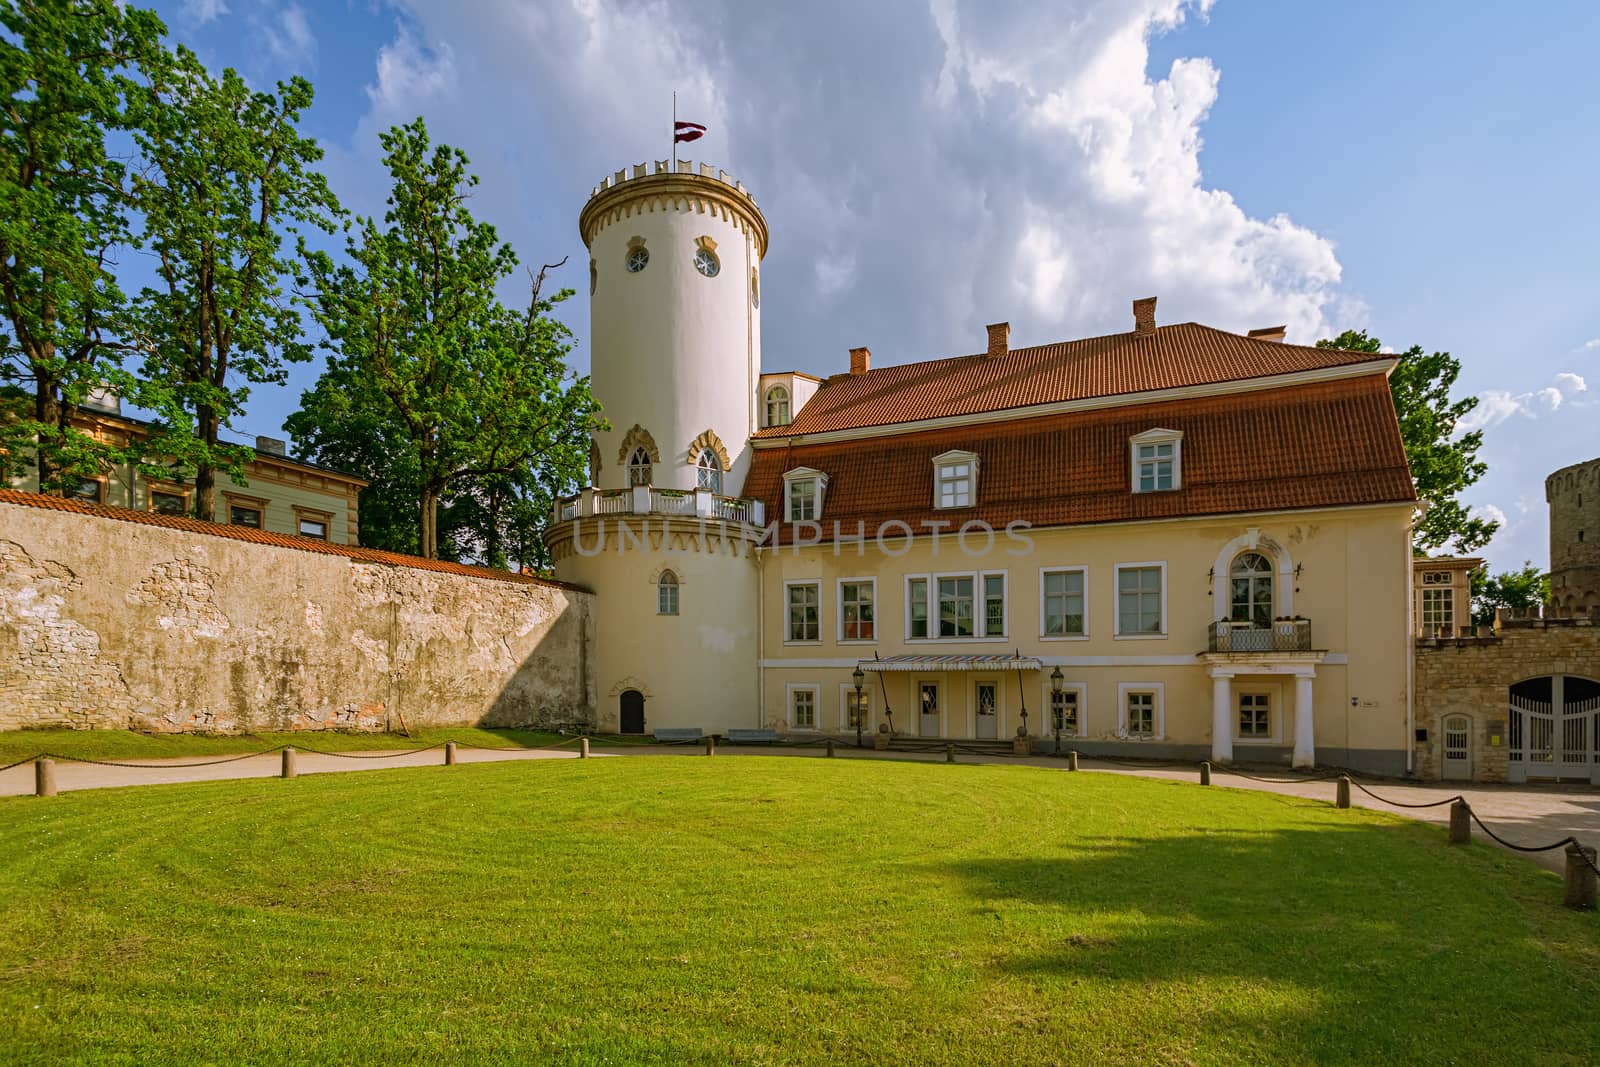 Old Castle in Cesis, Latvia